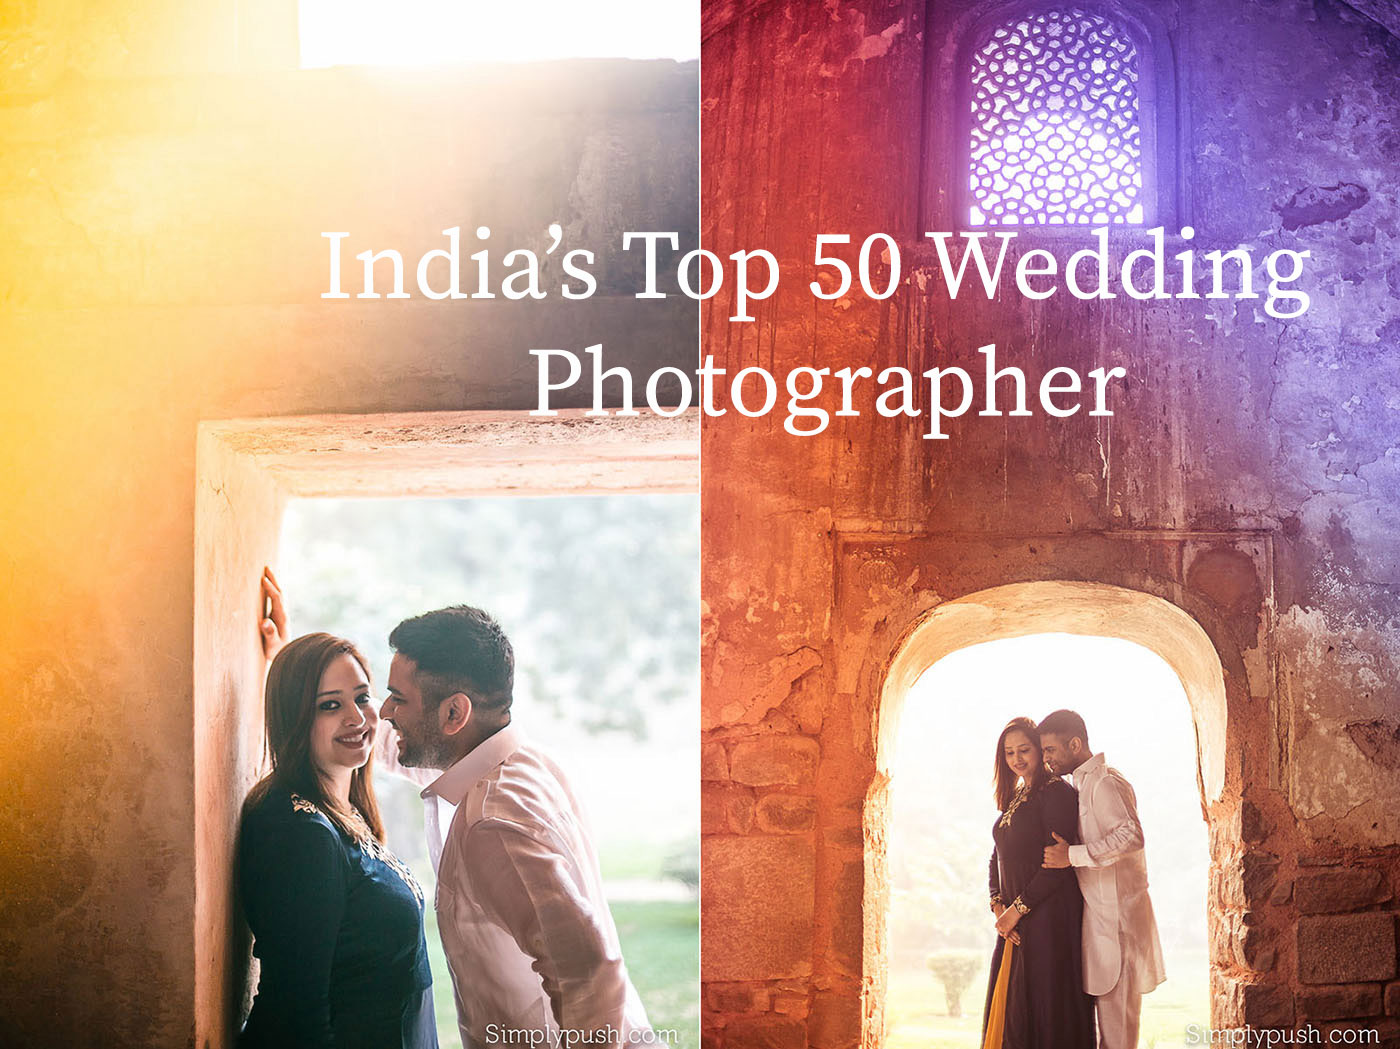 destination wedding photographer india